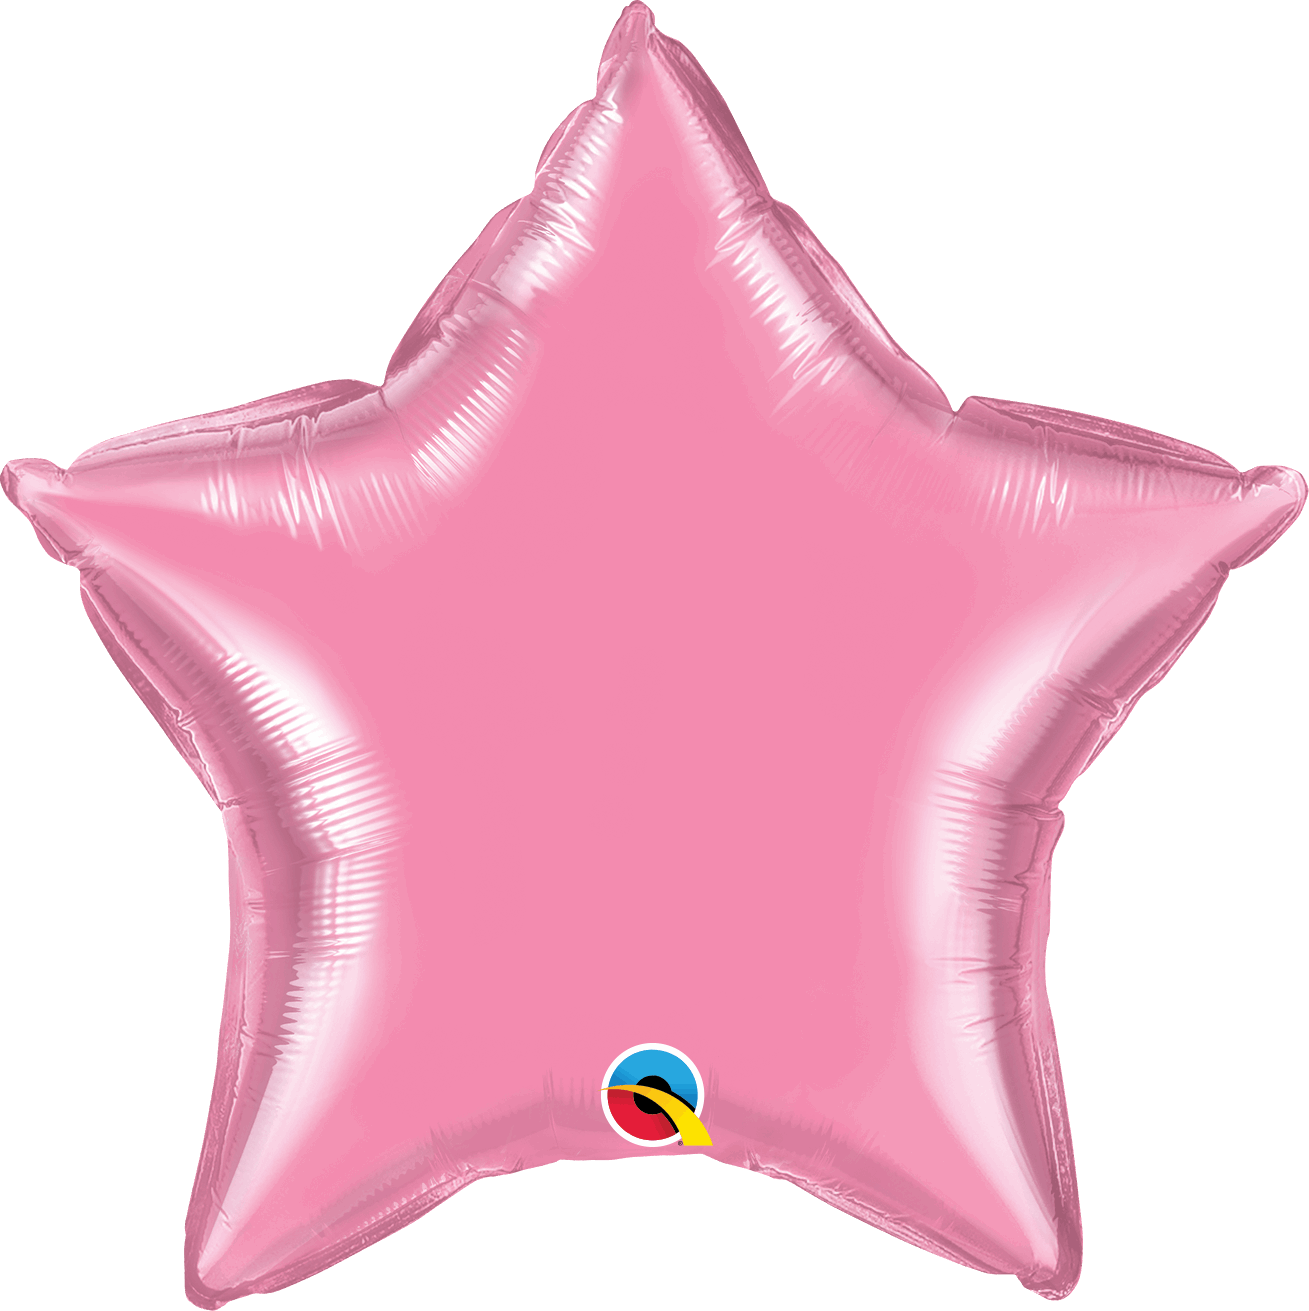 Light Pink Star Foil Balloons